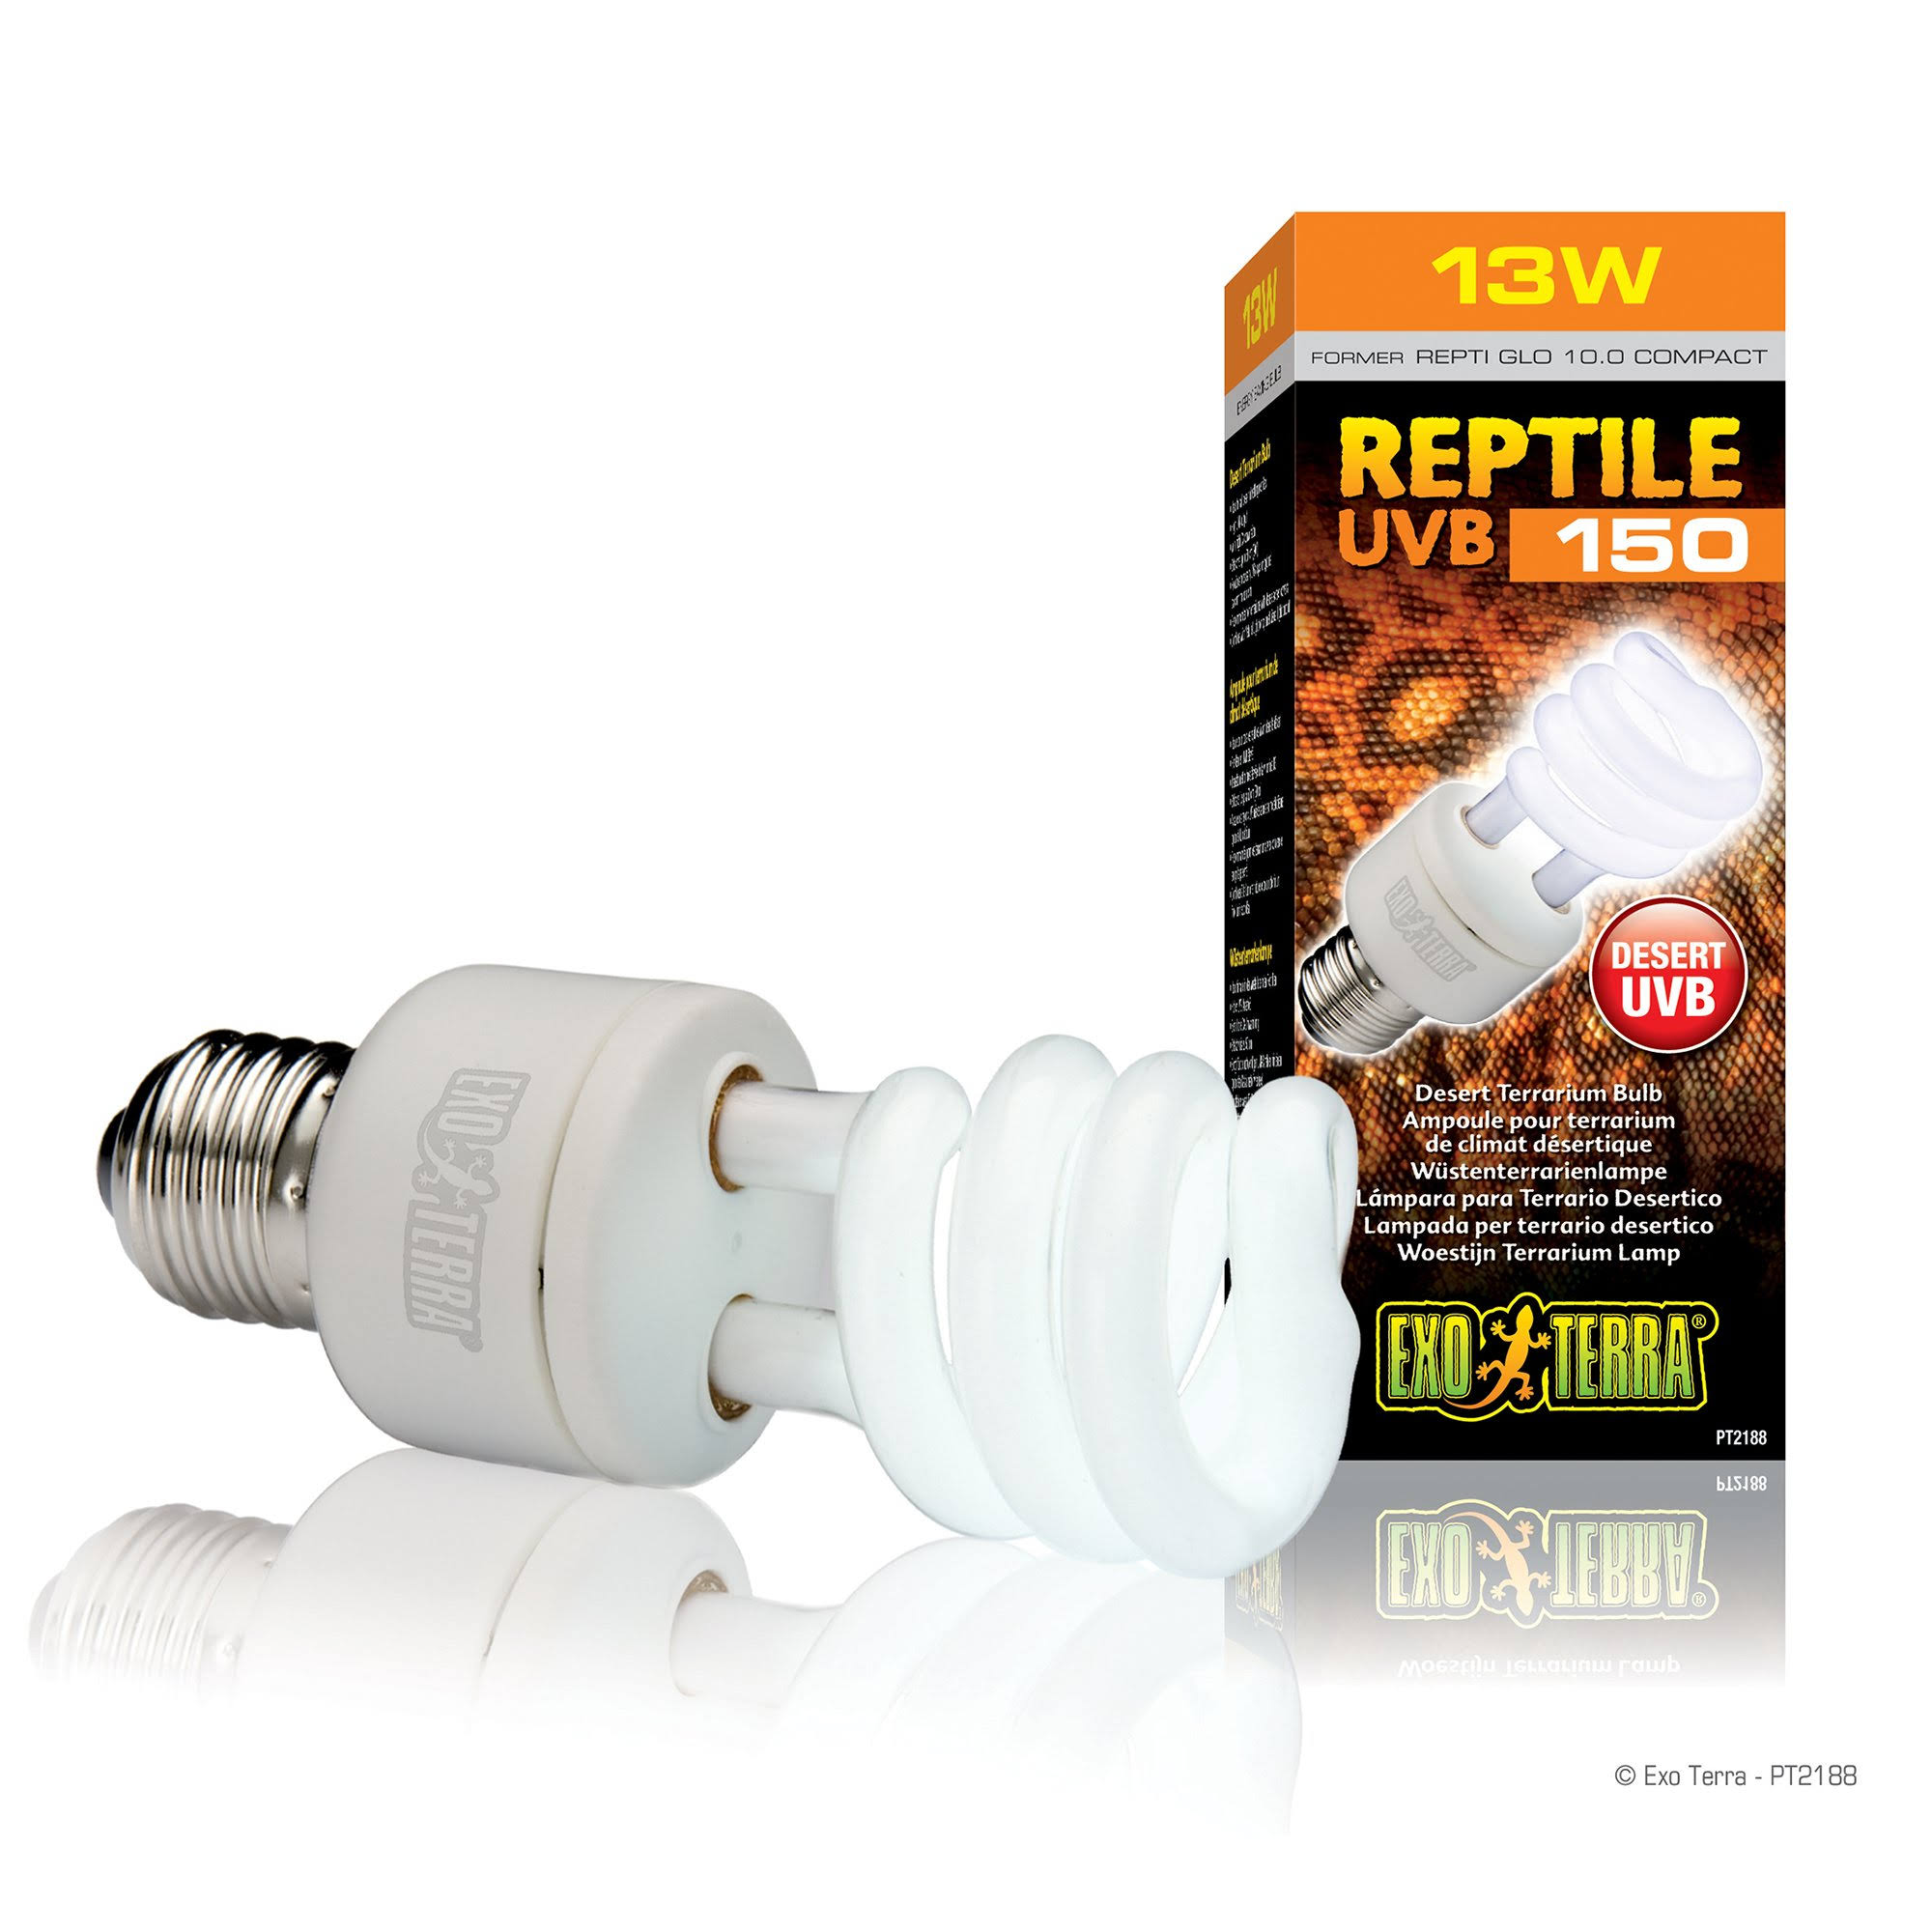 Exo Terra Reptile UVB 10.0 Compact Lamp - 13W